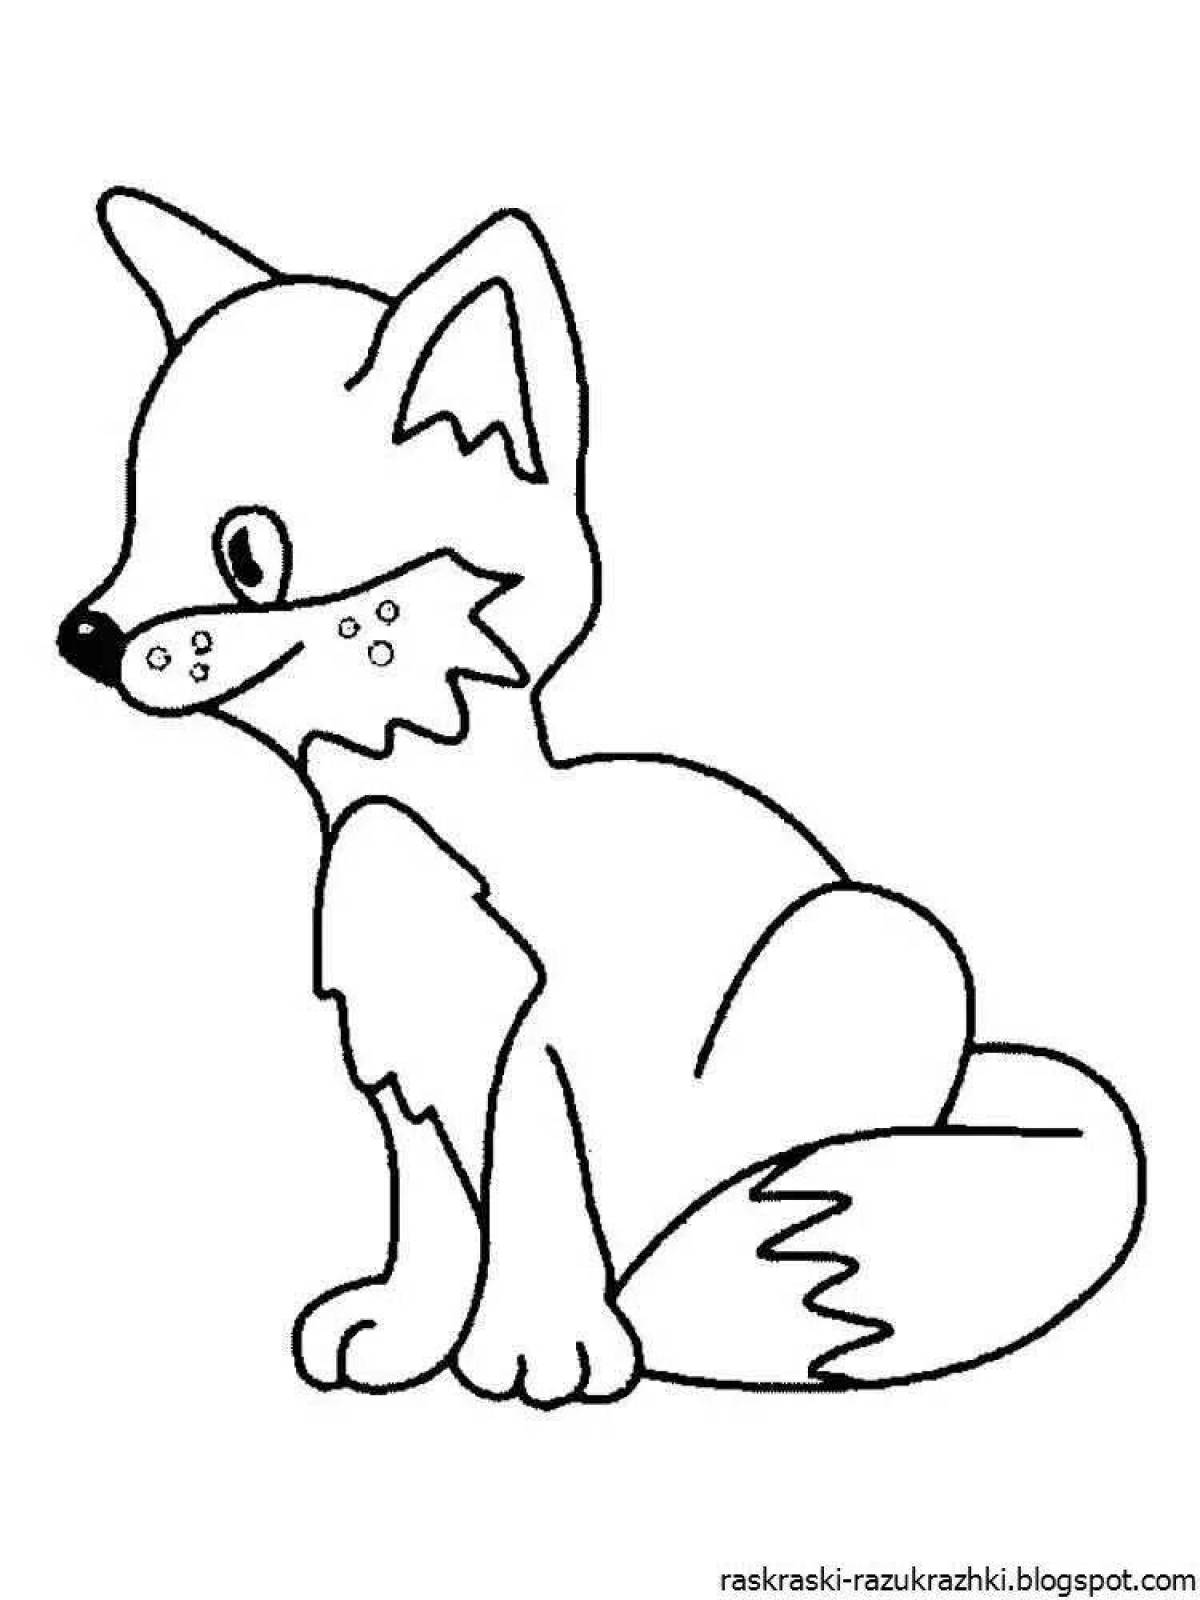 Adorable fox drawing